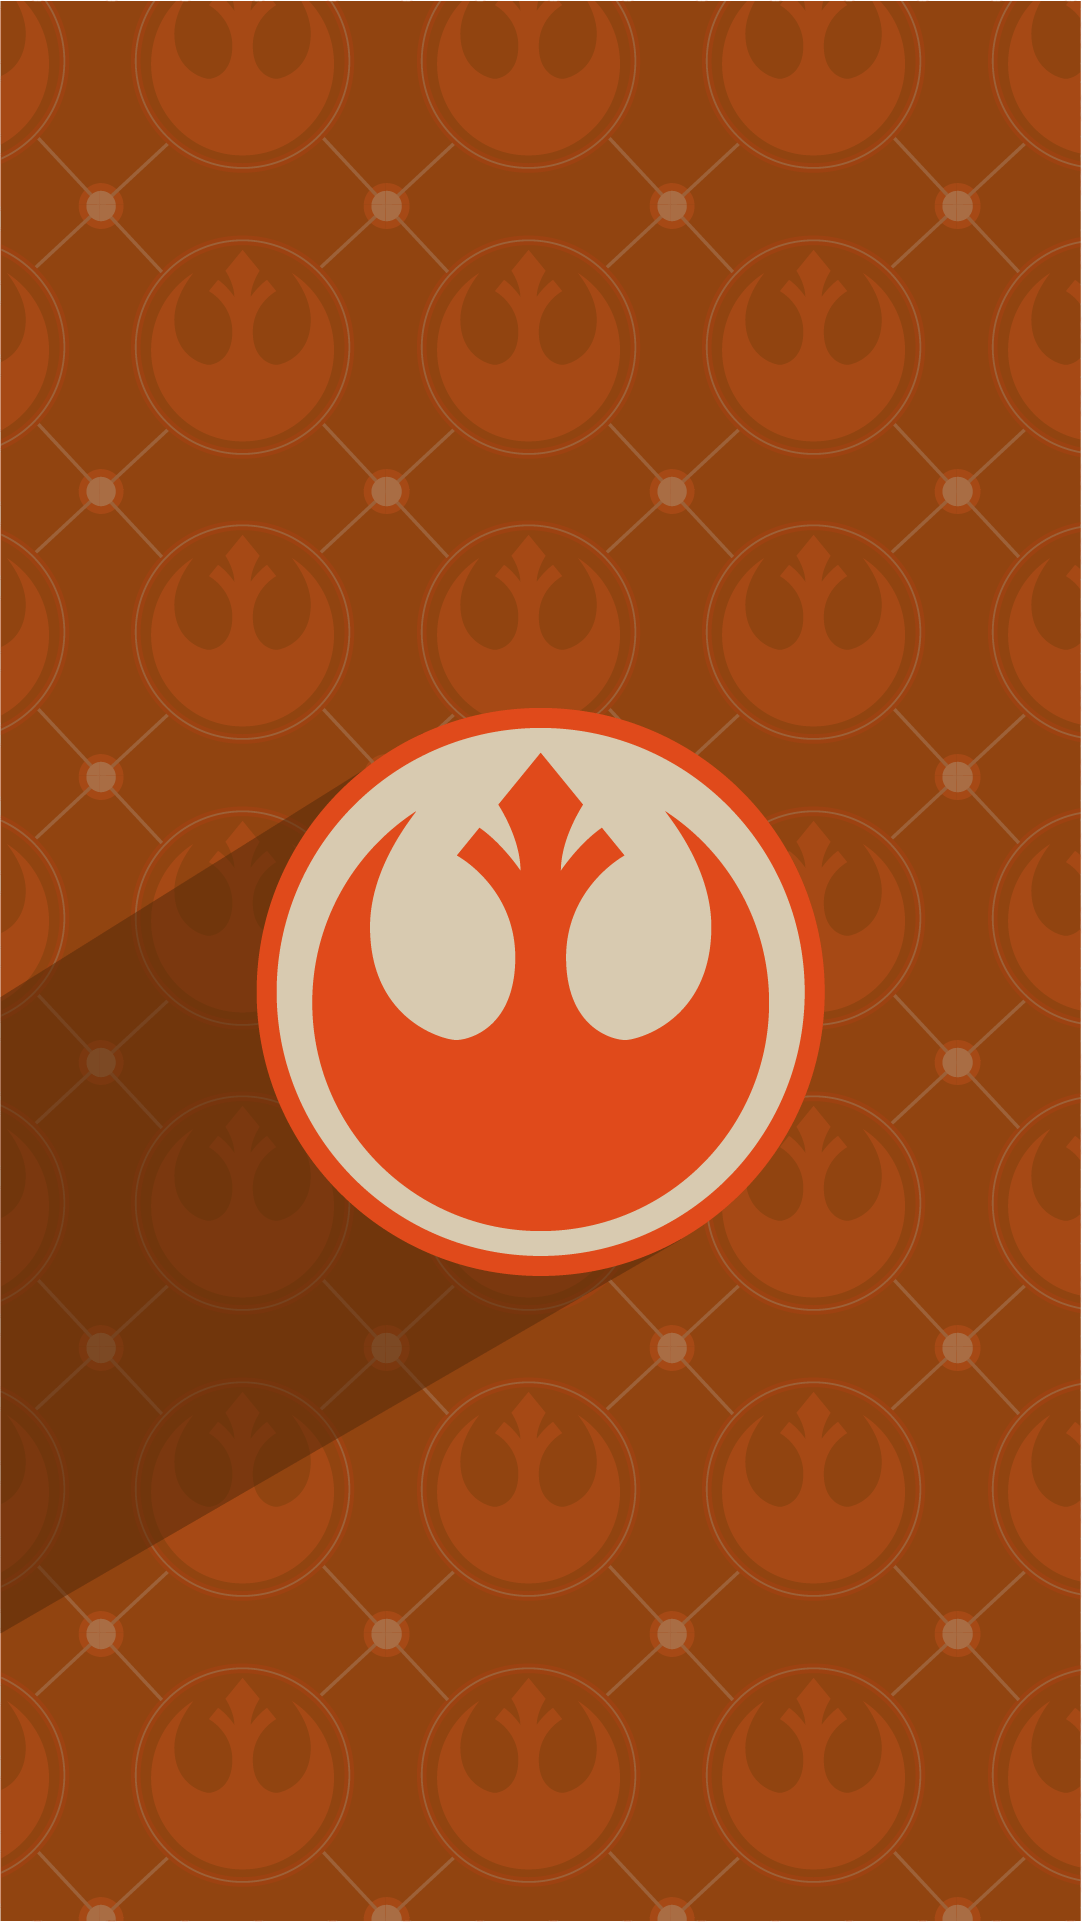 Star Wars Rebel iPhone Wallpaper